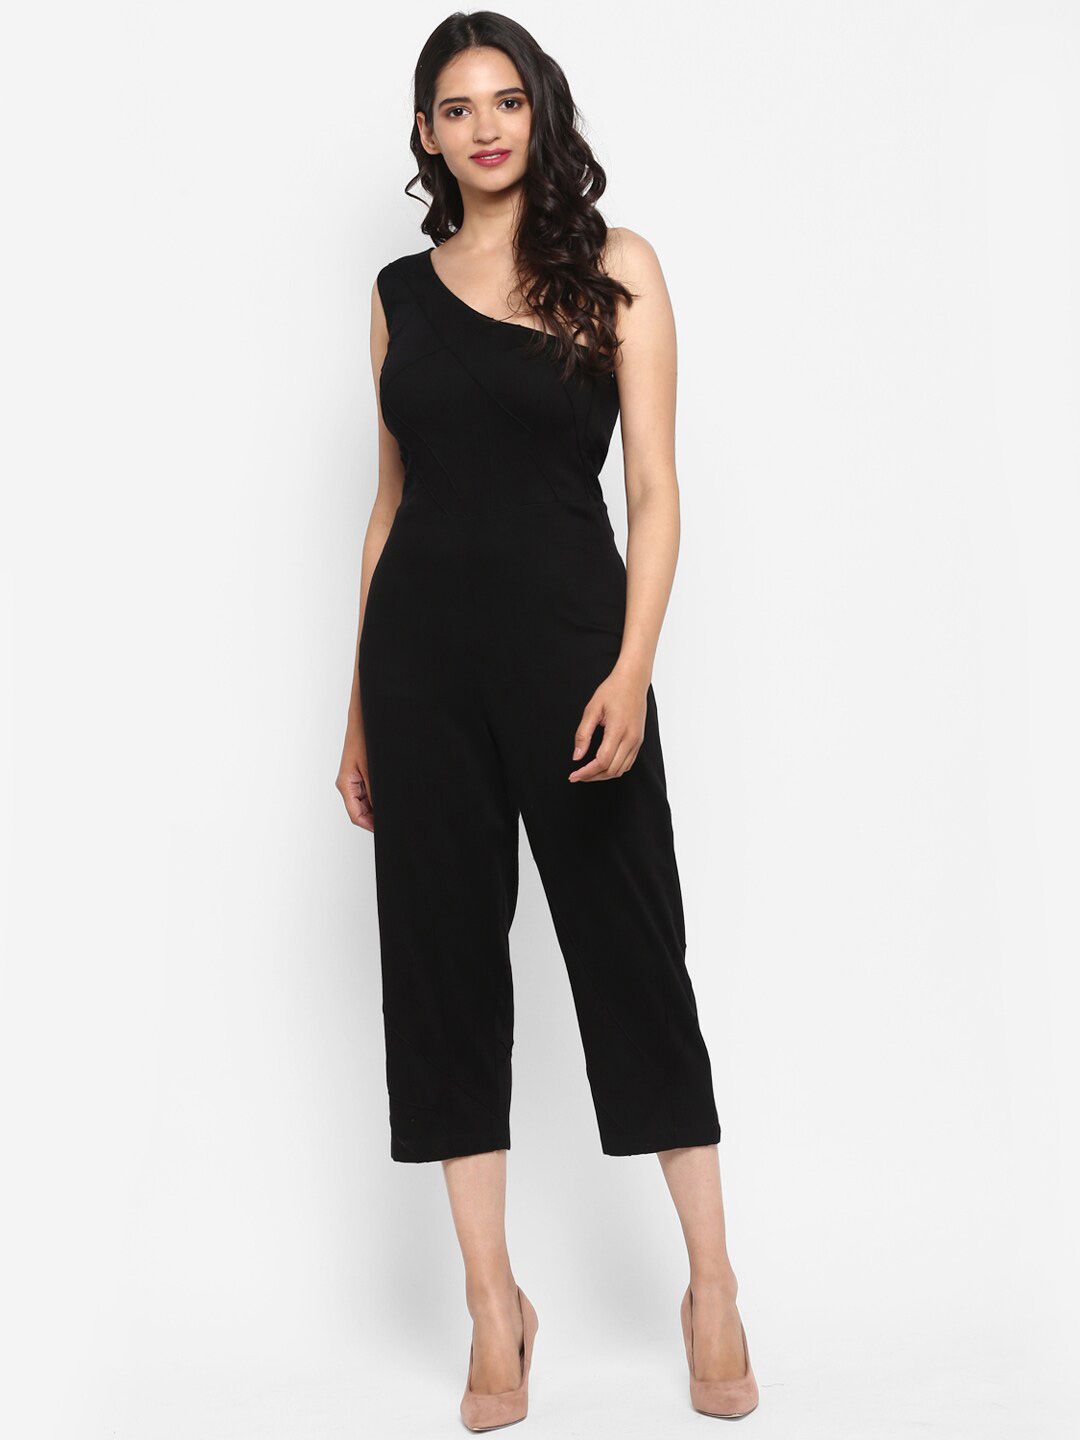 DEEBACO Black One Shoulder Culotte Jumpsuit Price in India